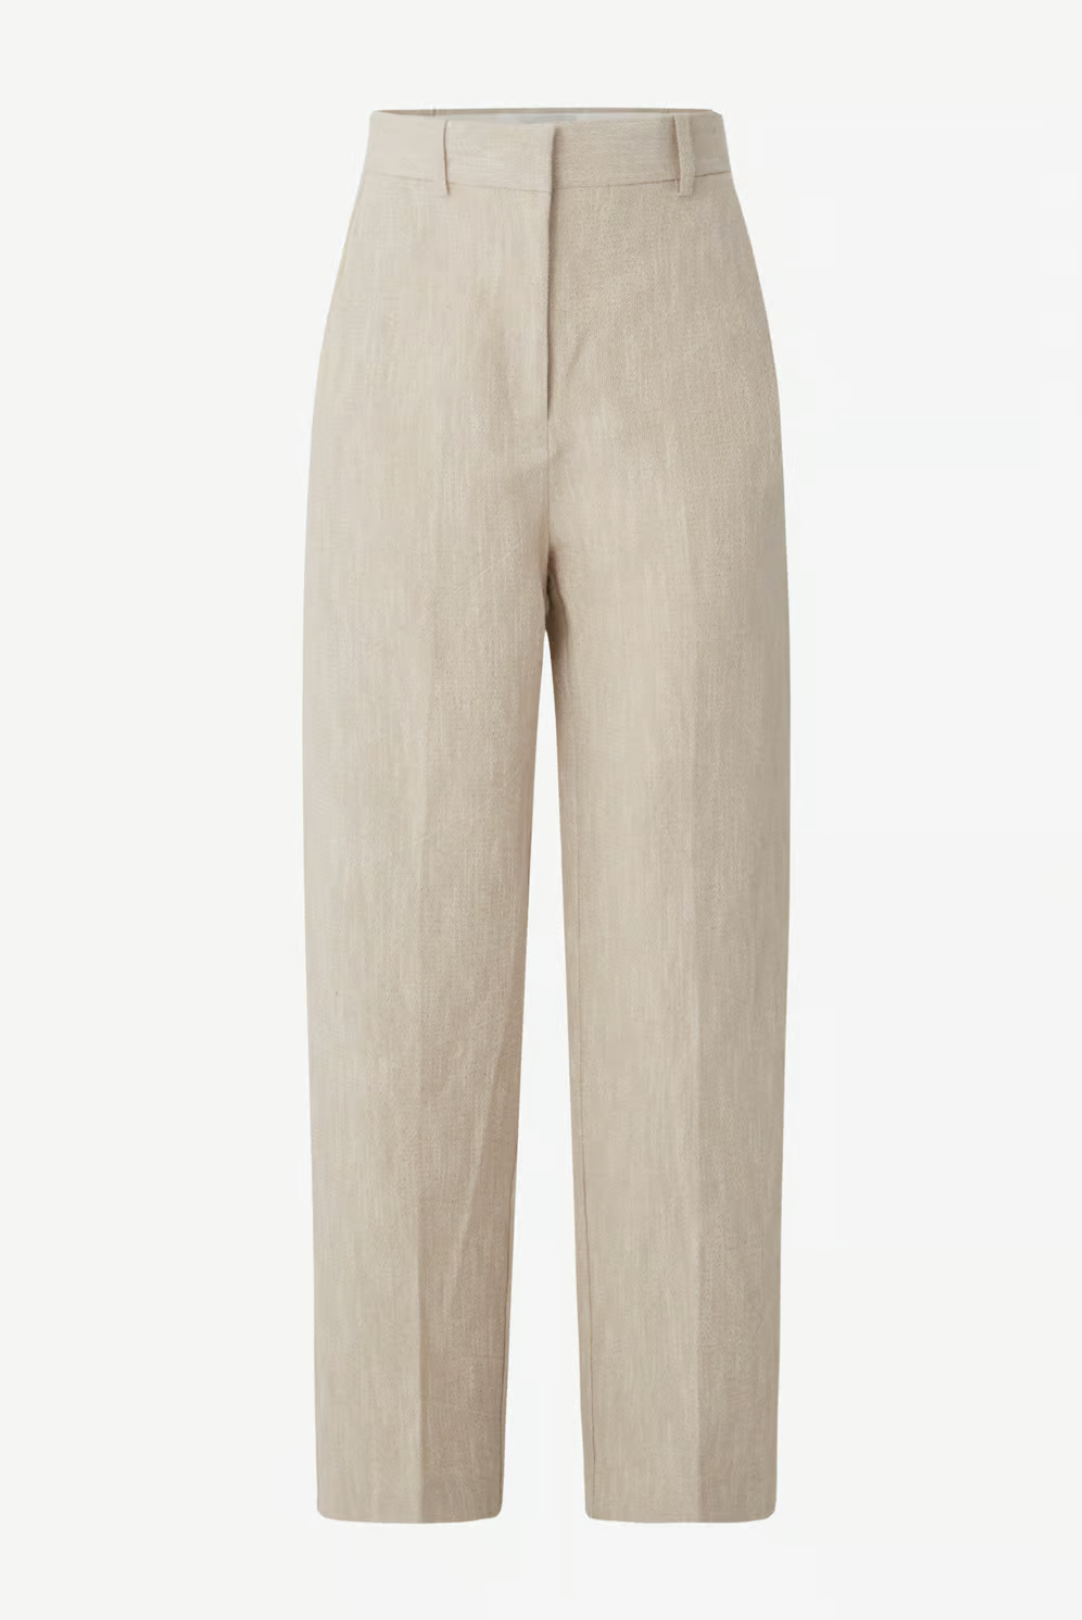 Tailored Linen Trouser: Light Sand Beige